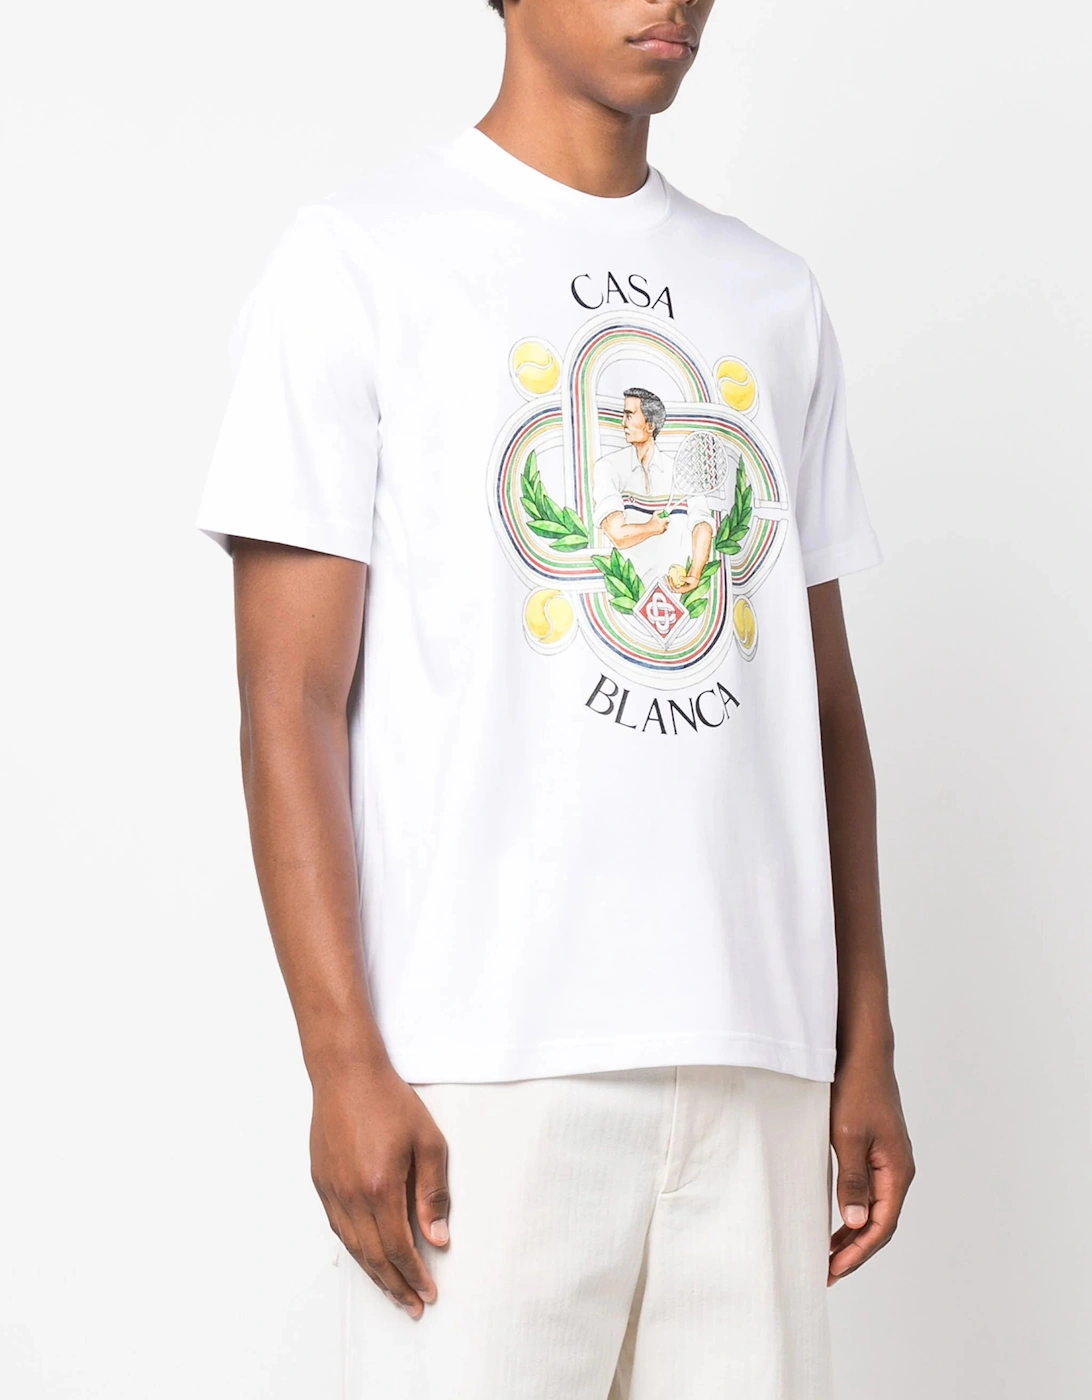 Le Joueur Print T-Shirt in White